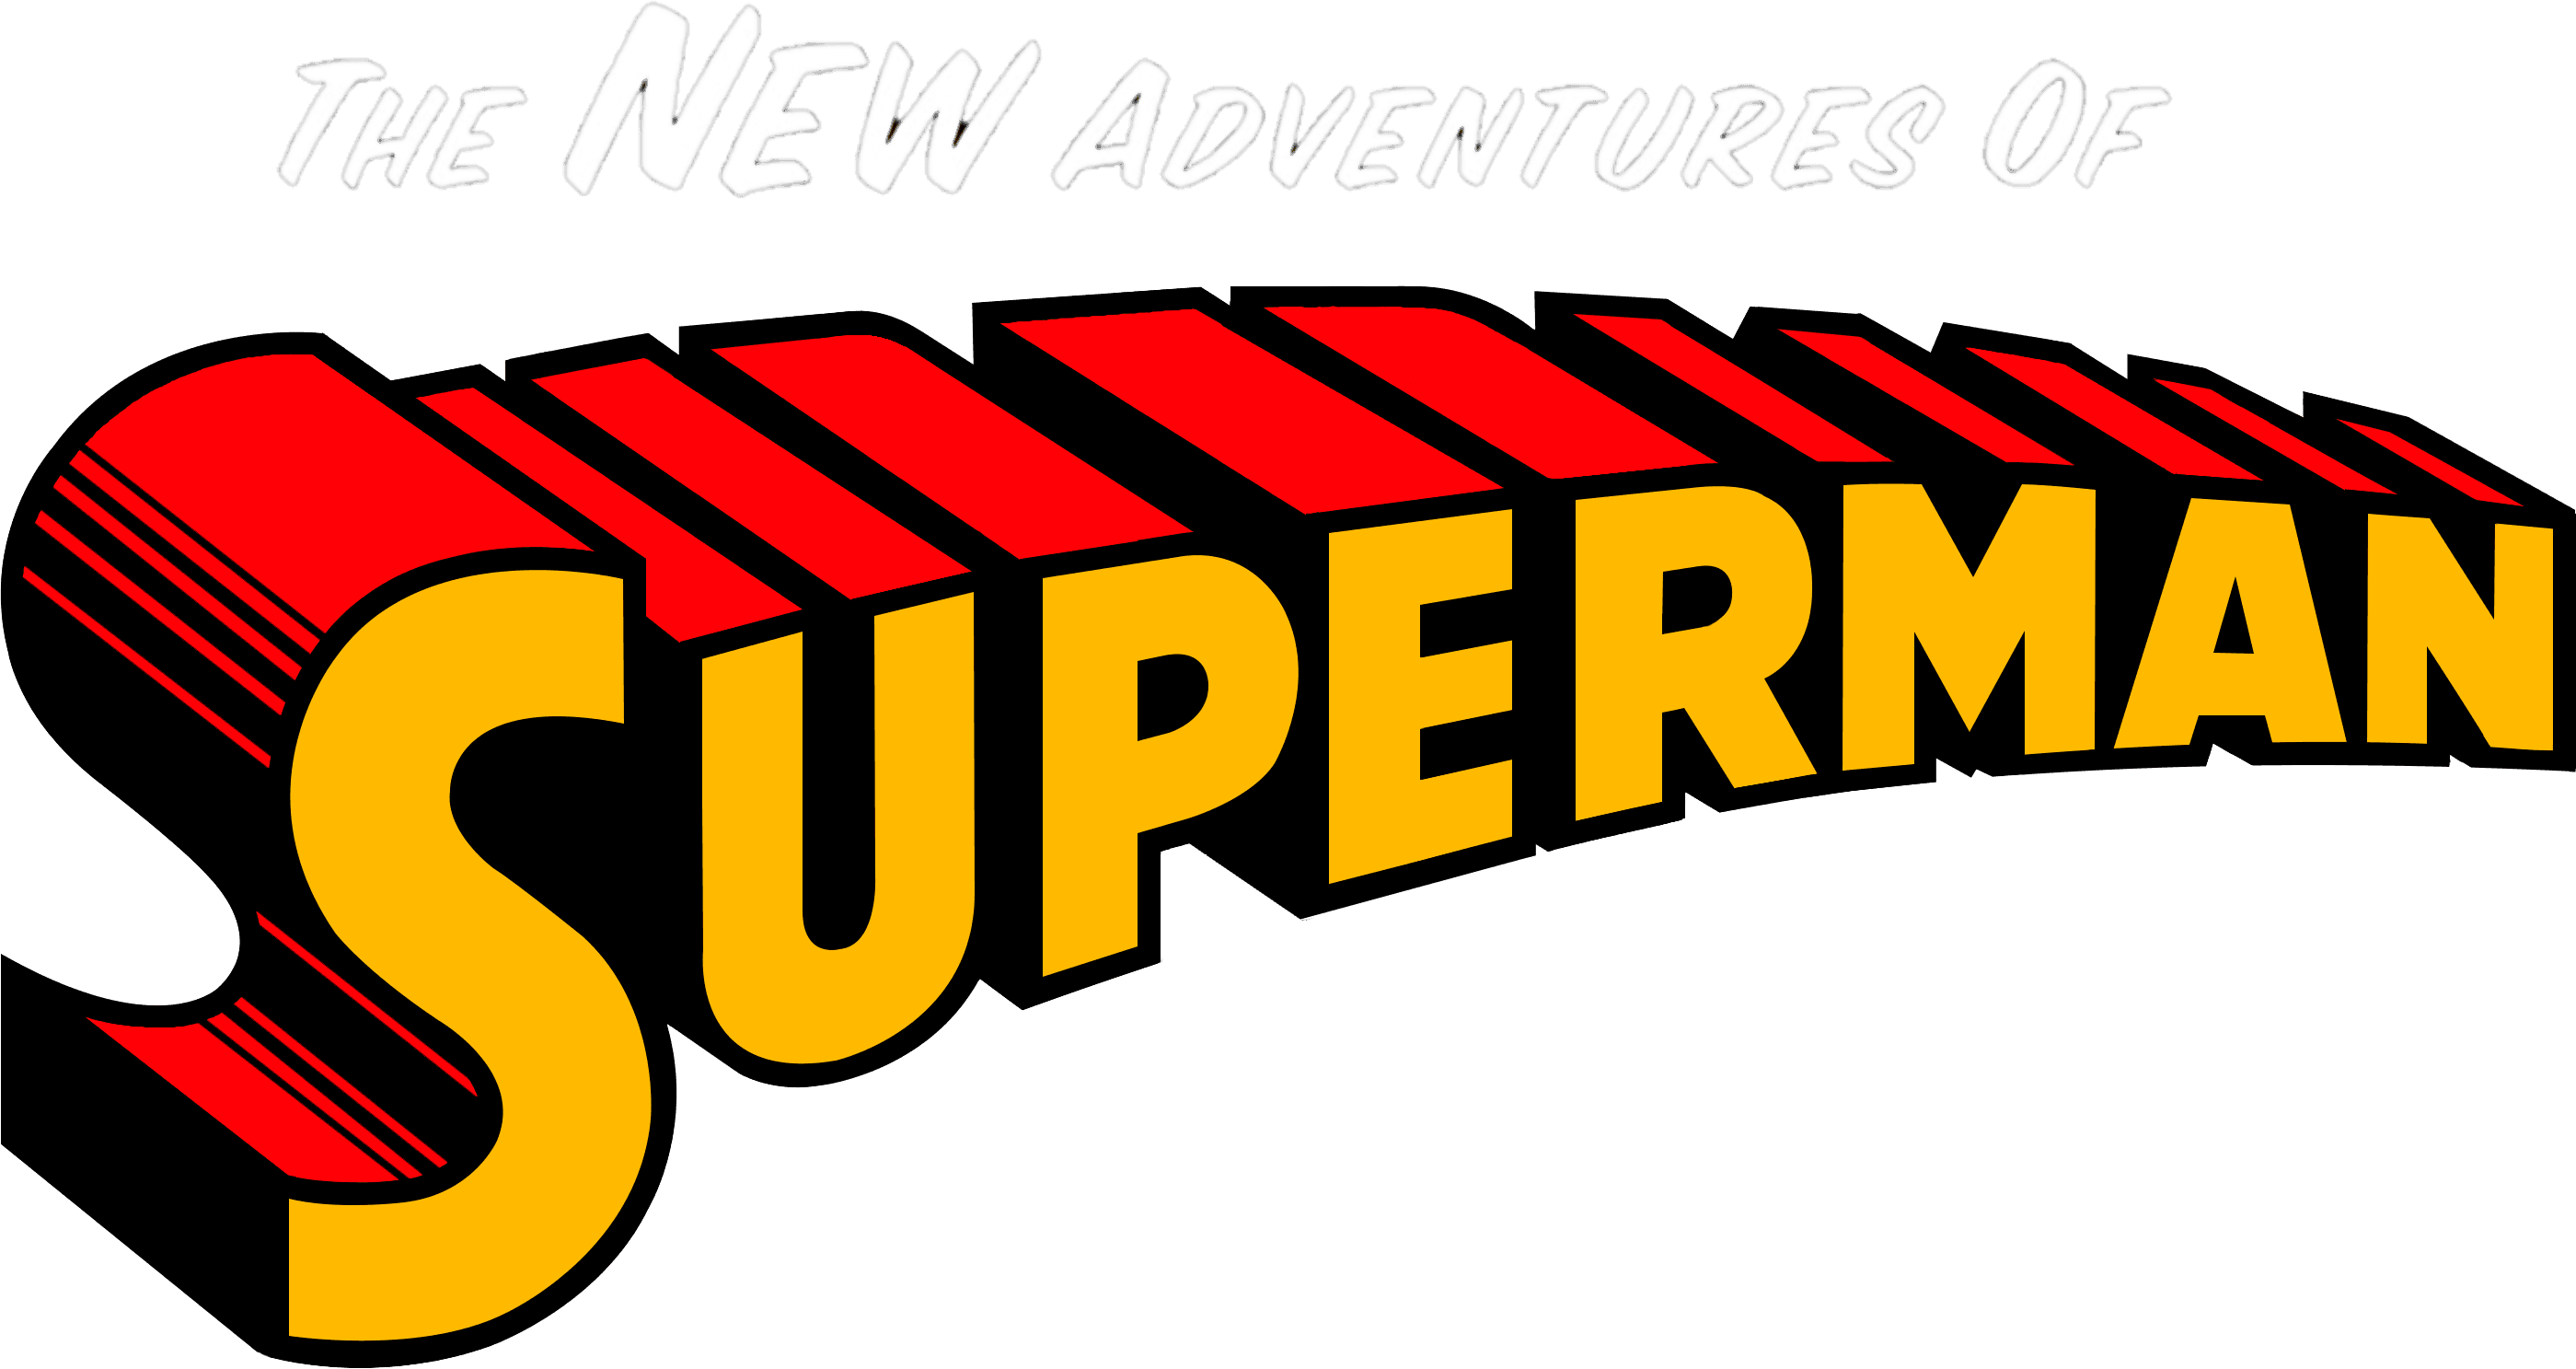 The New Adventures of Superman logo